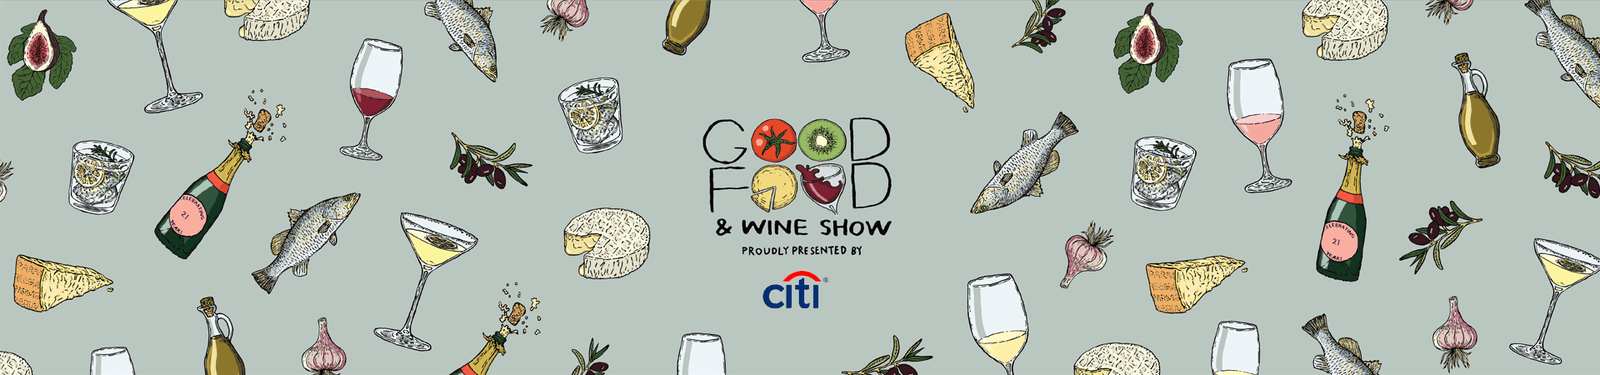 Good Food & Wine Show-2023